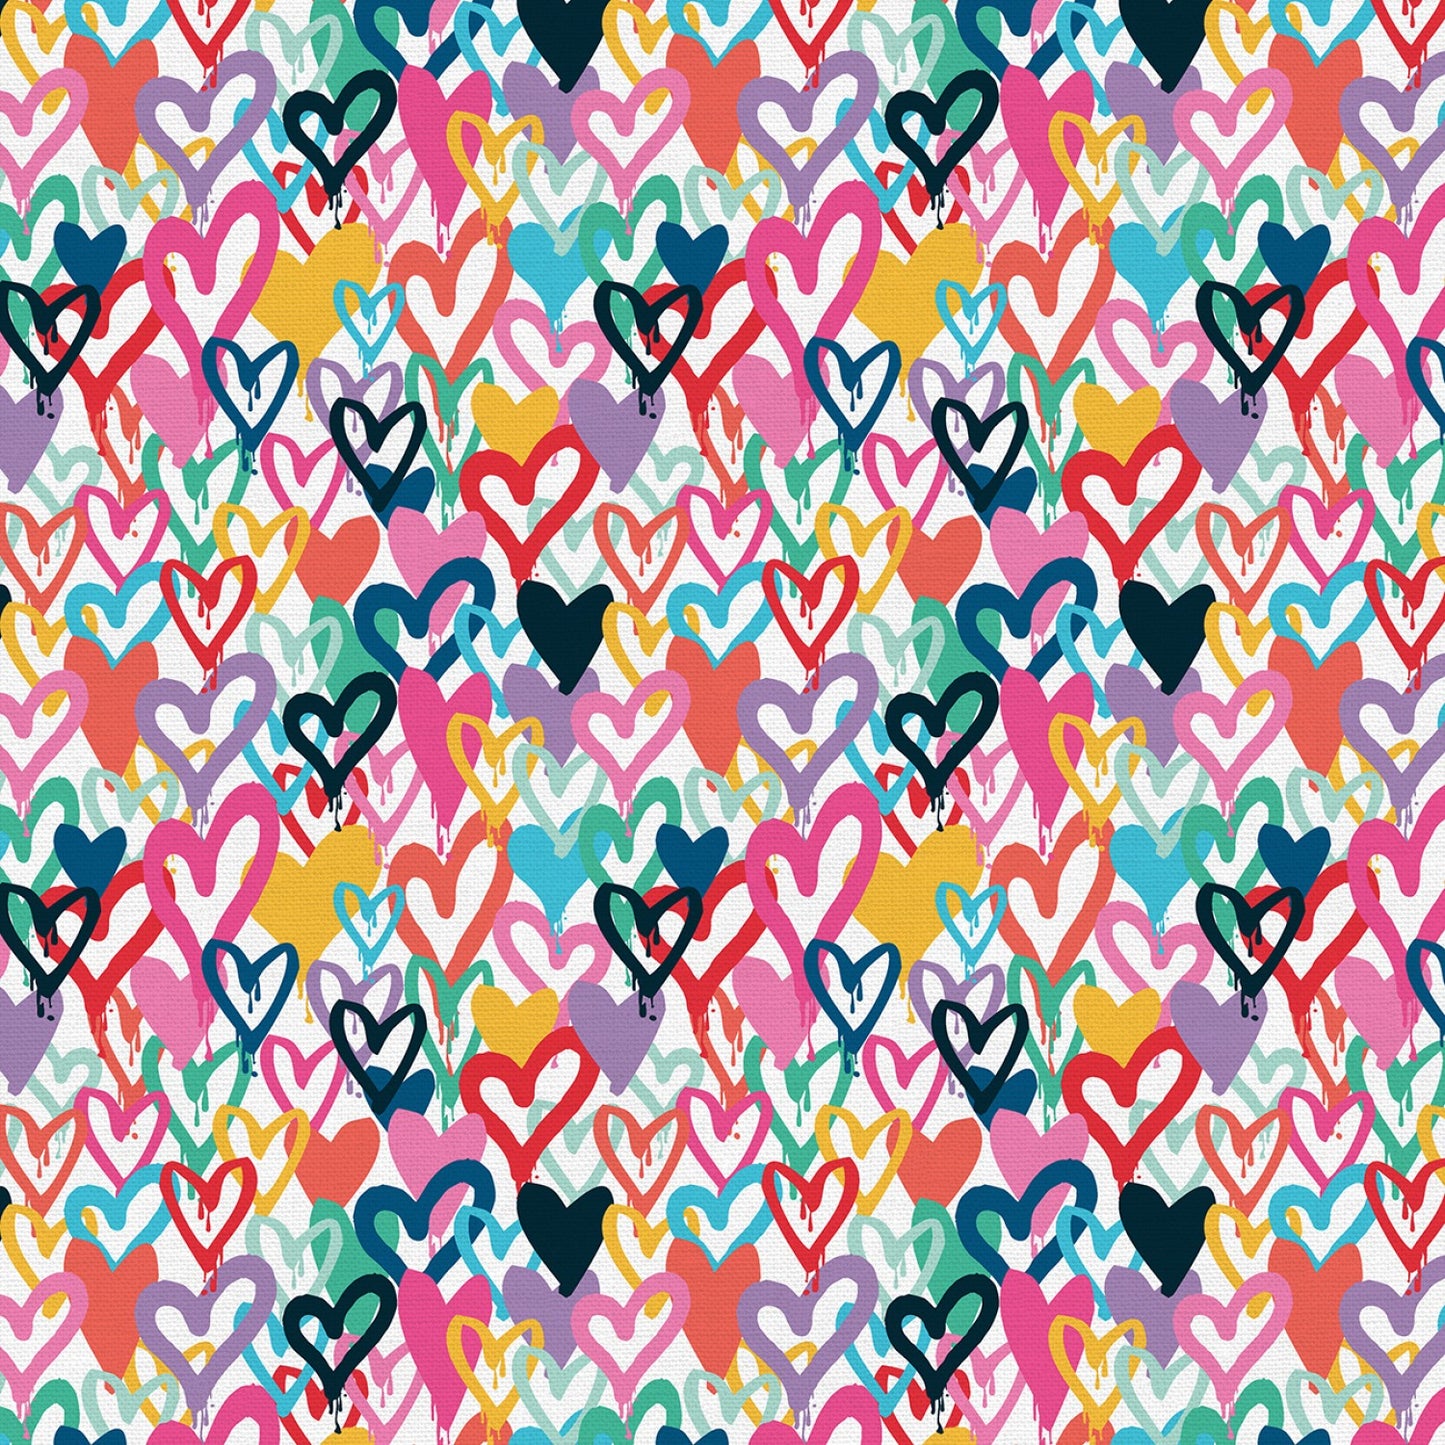 Bright Love by Lisa Whitebutton Grunge Hearts Multi 120-22650 Cotton Woven Fabric